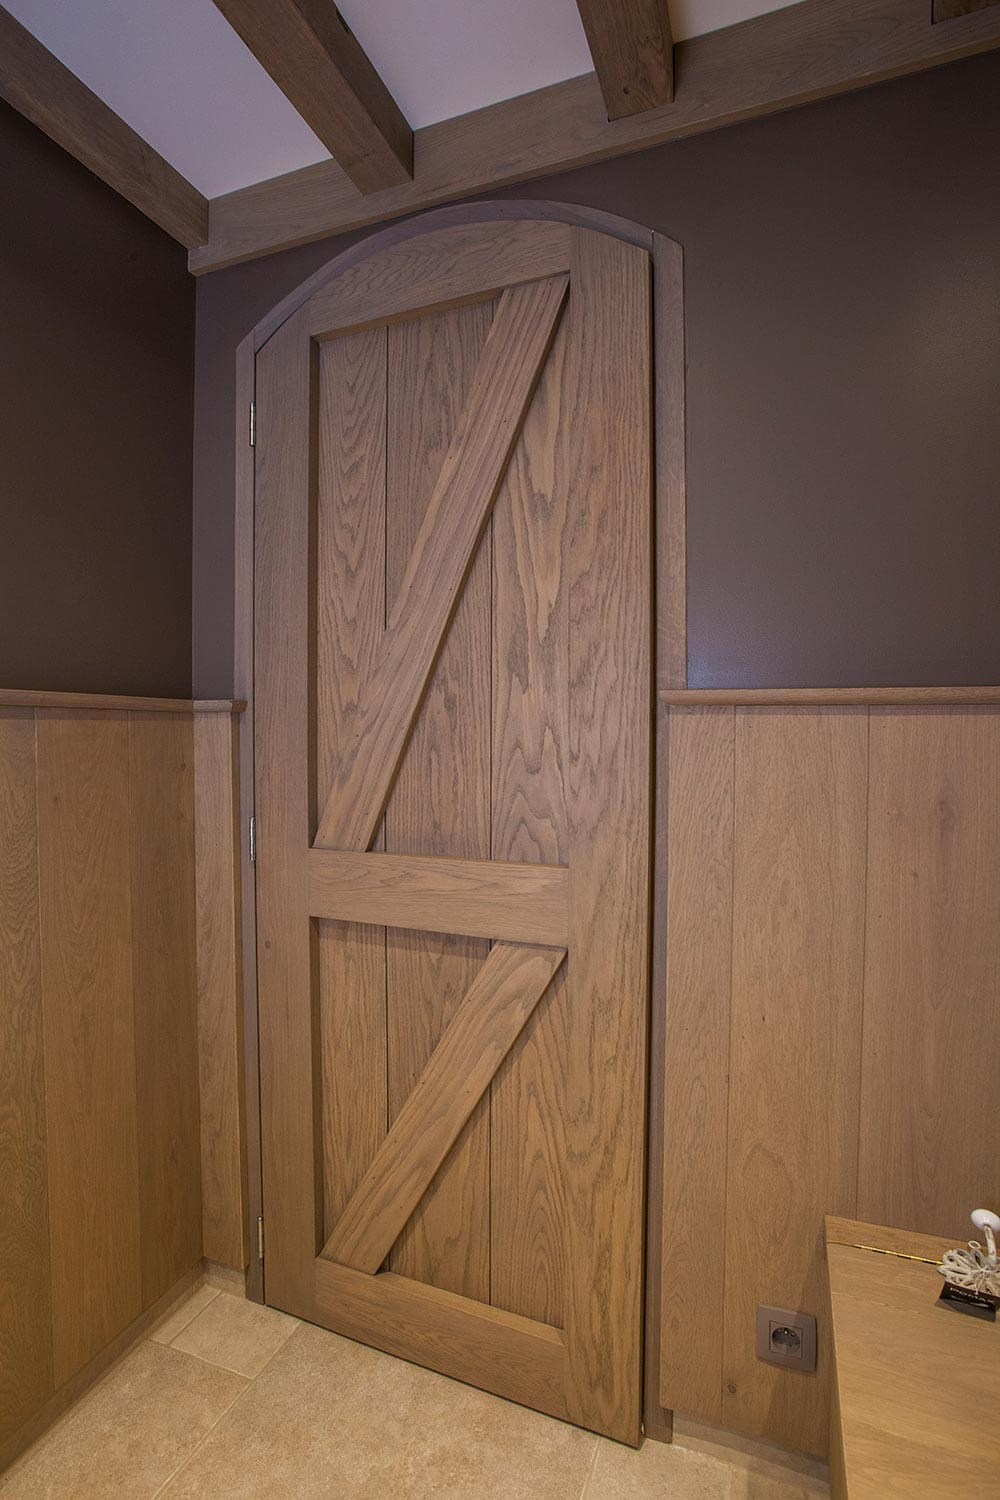 toegangsdeur tot Wellness in een country/cottage stijl. materiaal van de deur is hout, ook de lambrisering is in hout